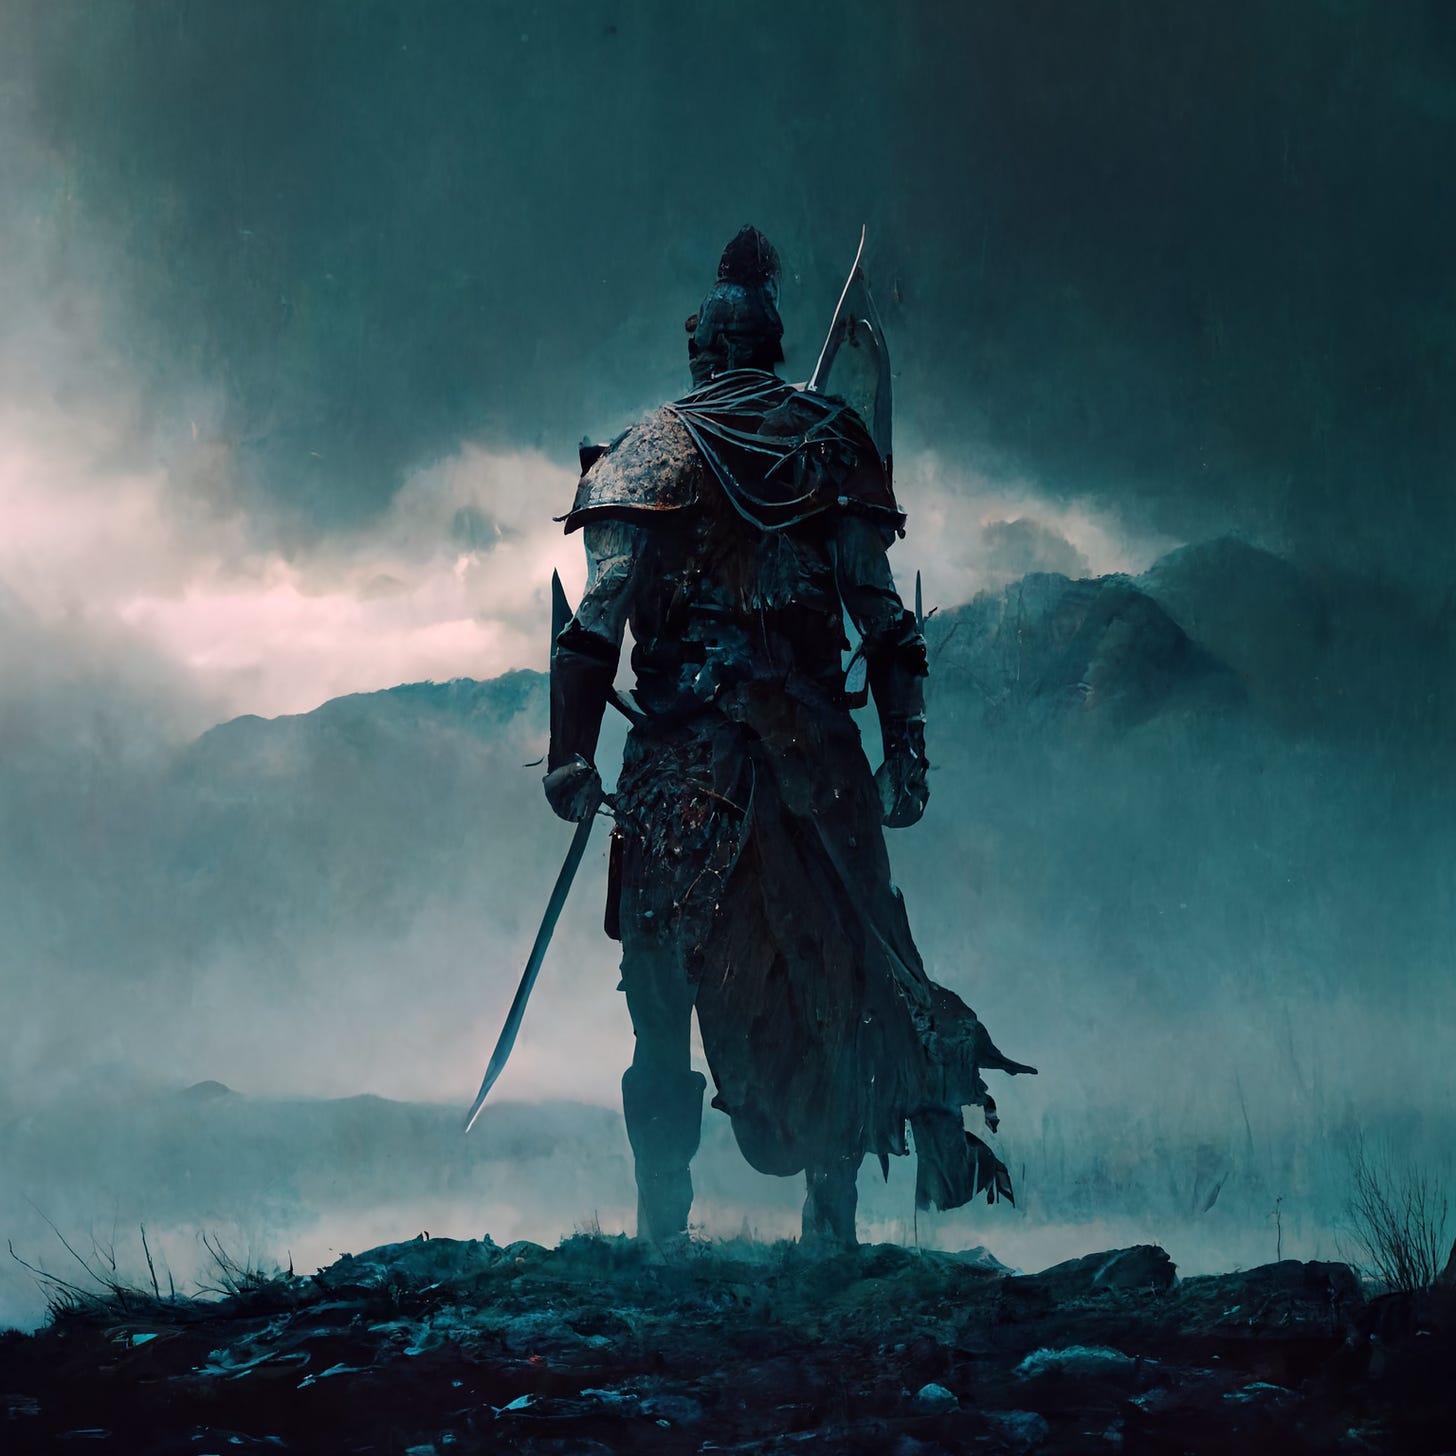 warrior archetype mythopoetic cinematic arr 16:9